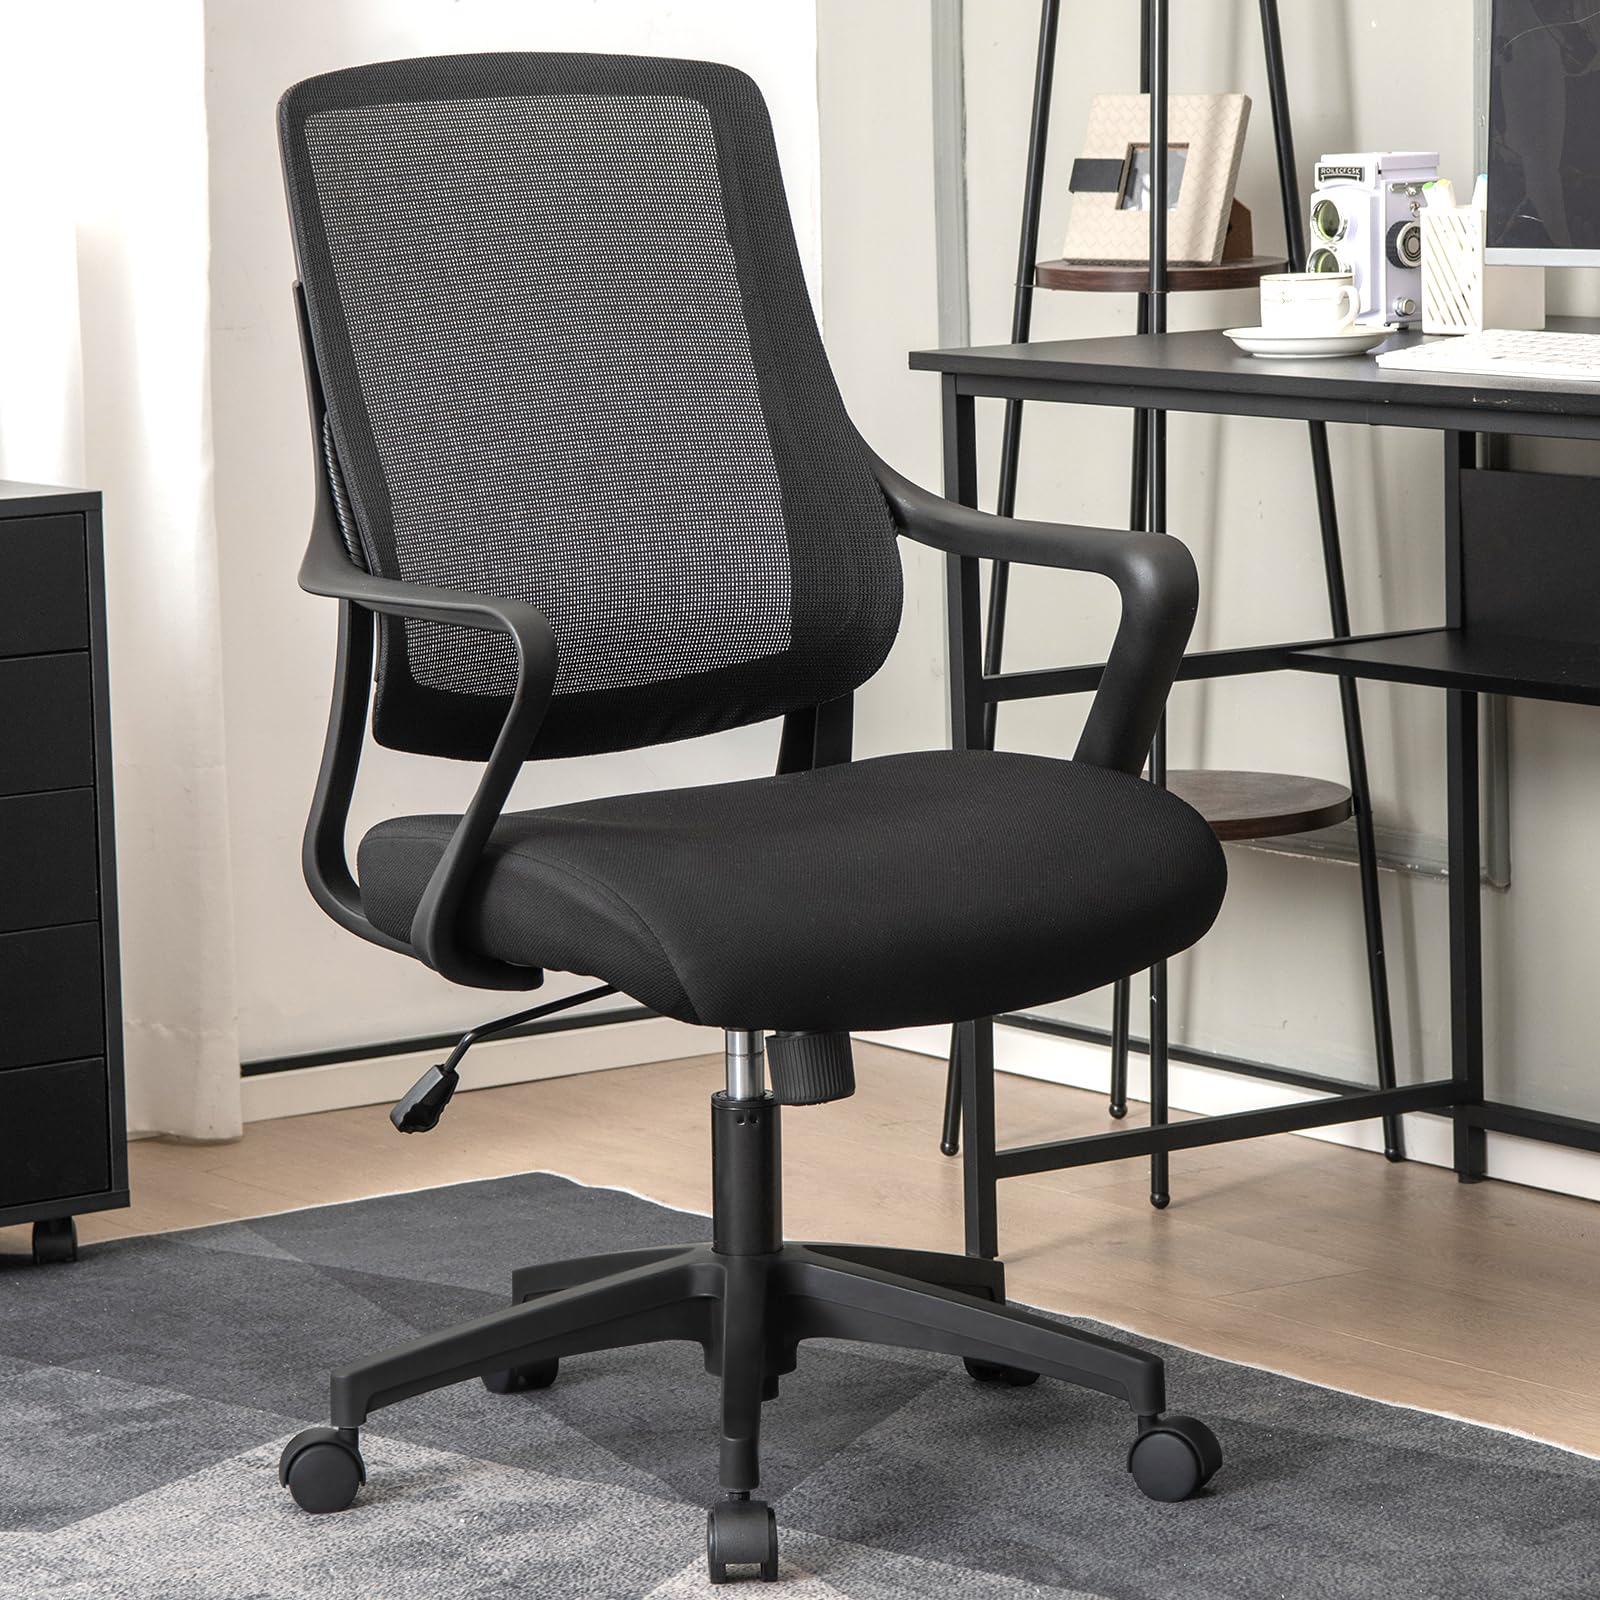 Giantex Mesh Office Desk Chair